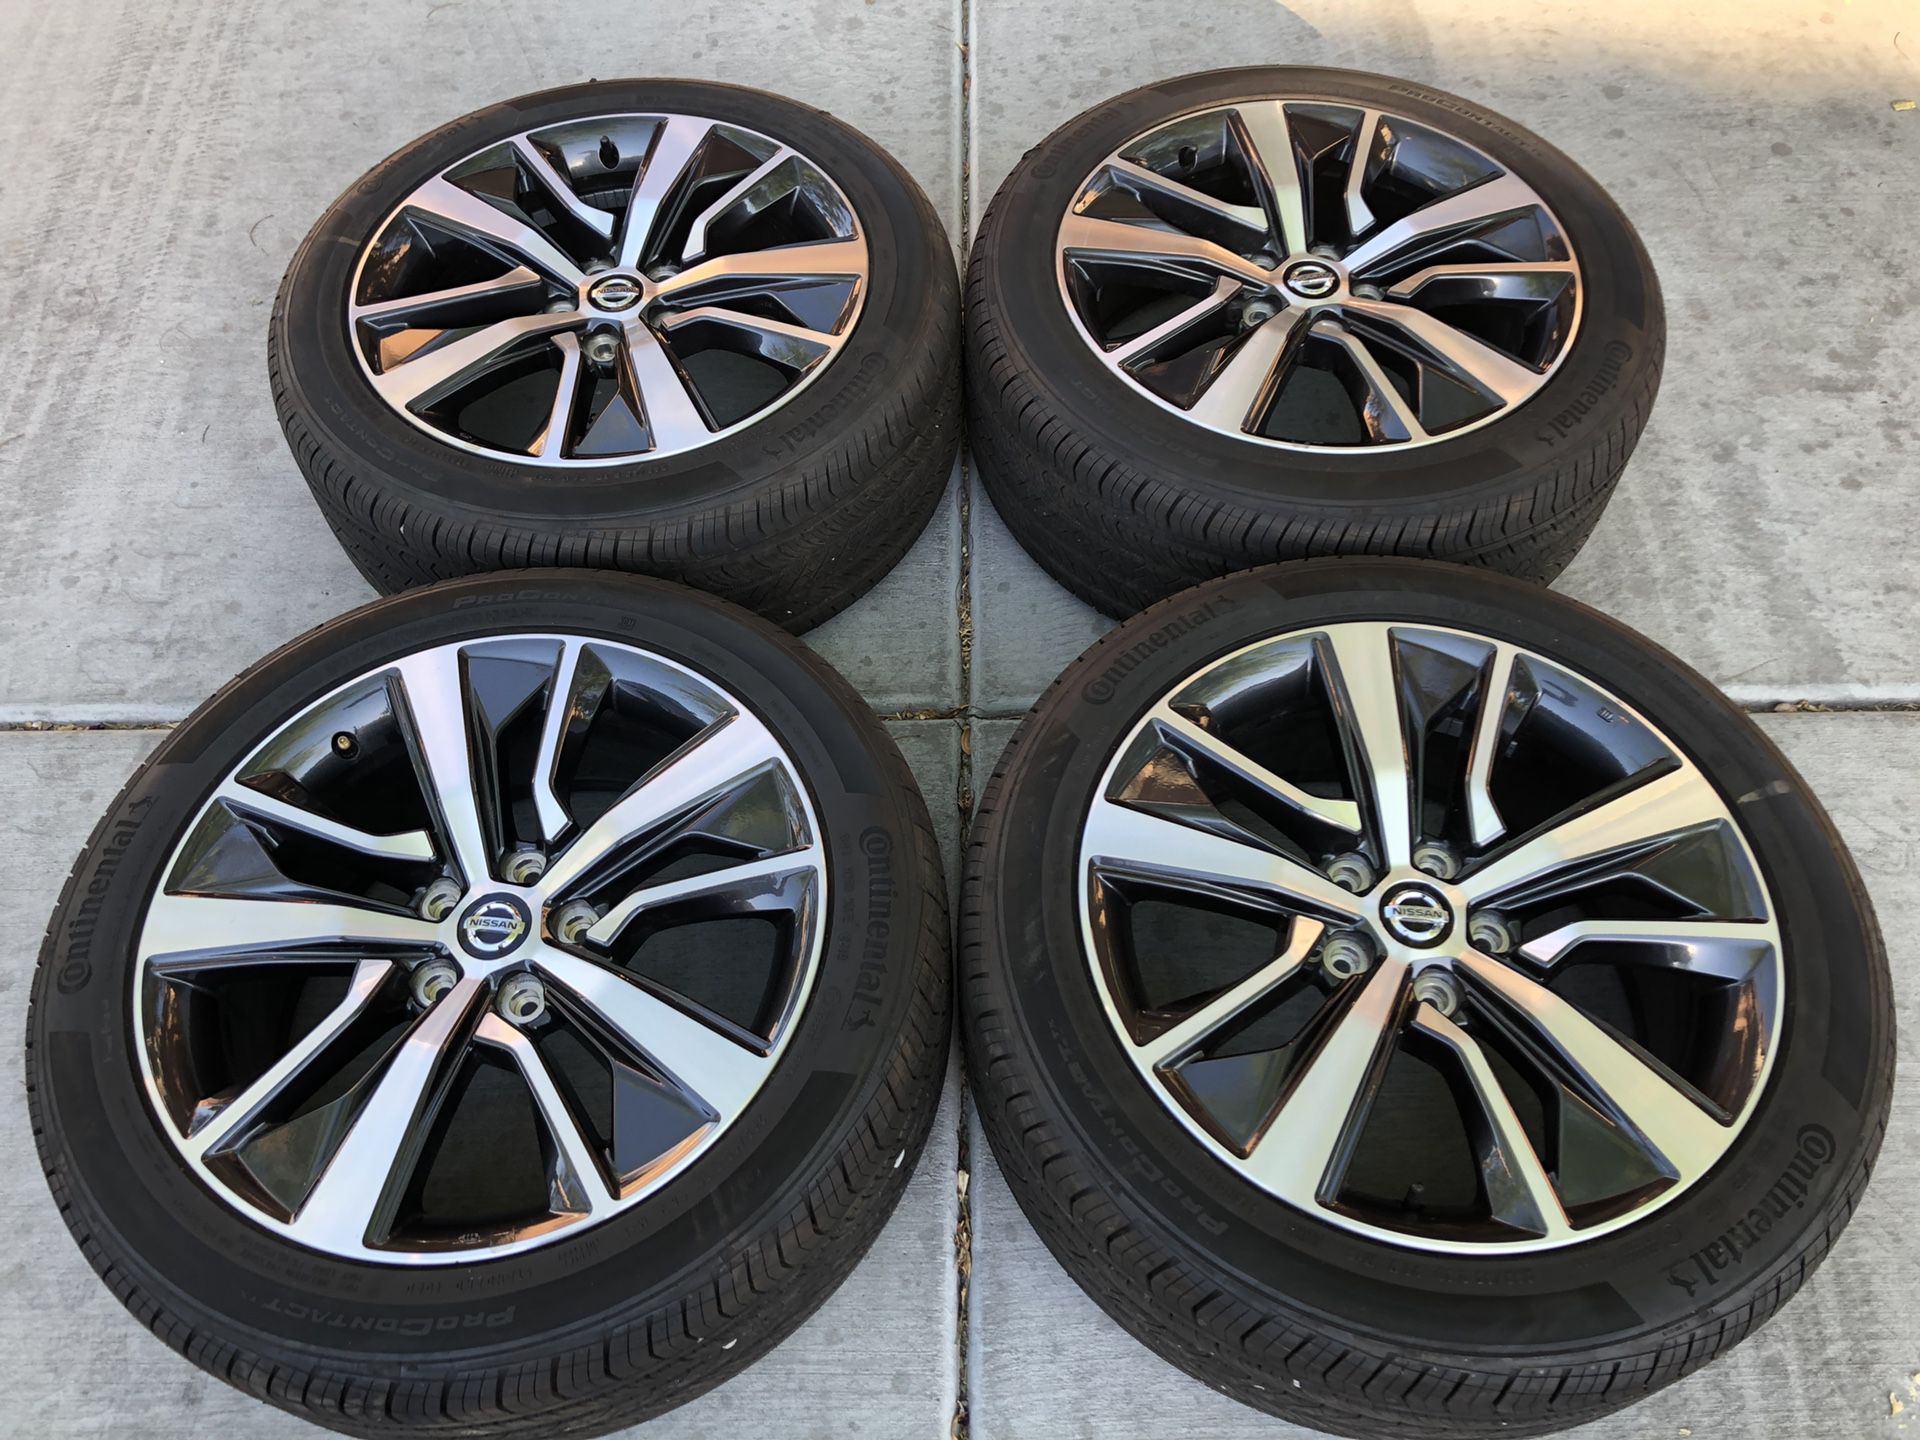 Nissan Maxima Altima 18” stock OEM wheels rims 245/45r18 Continental tires